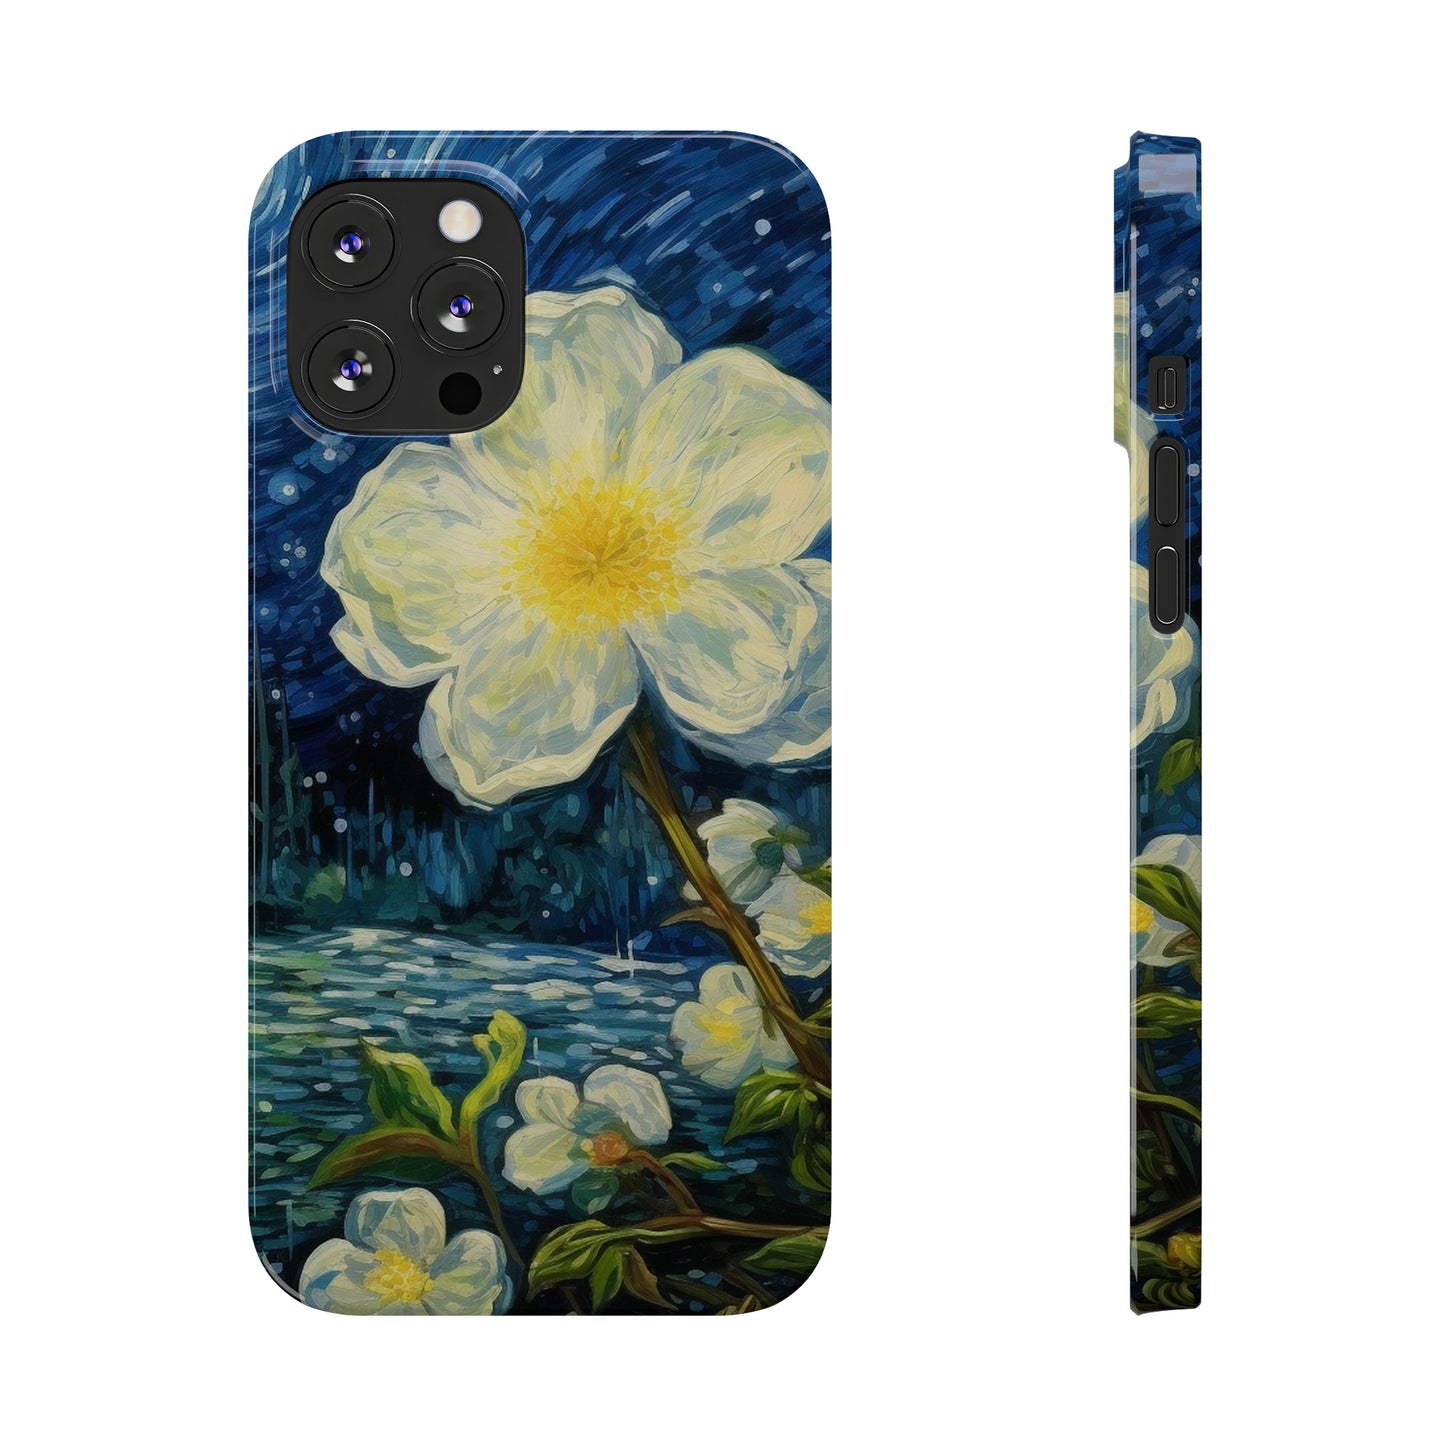 Van Gogh flower garden iPhone case